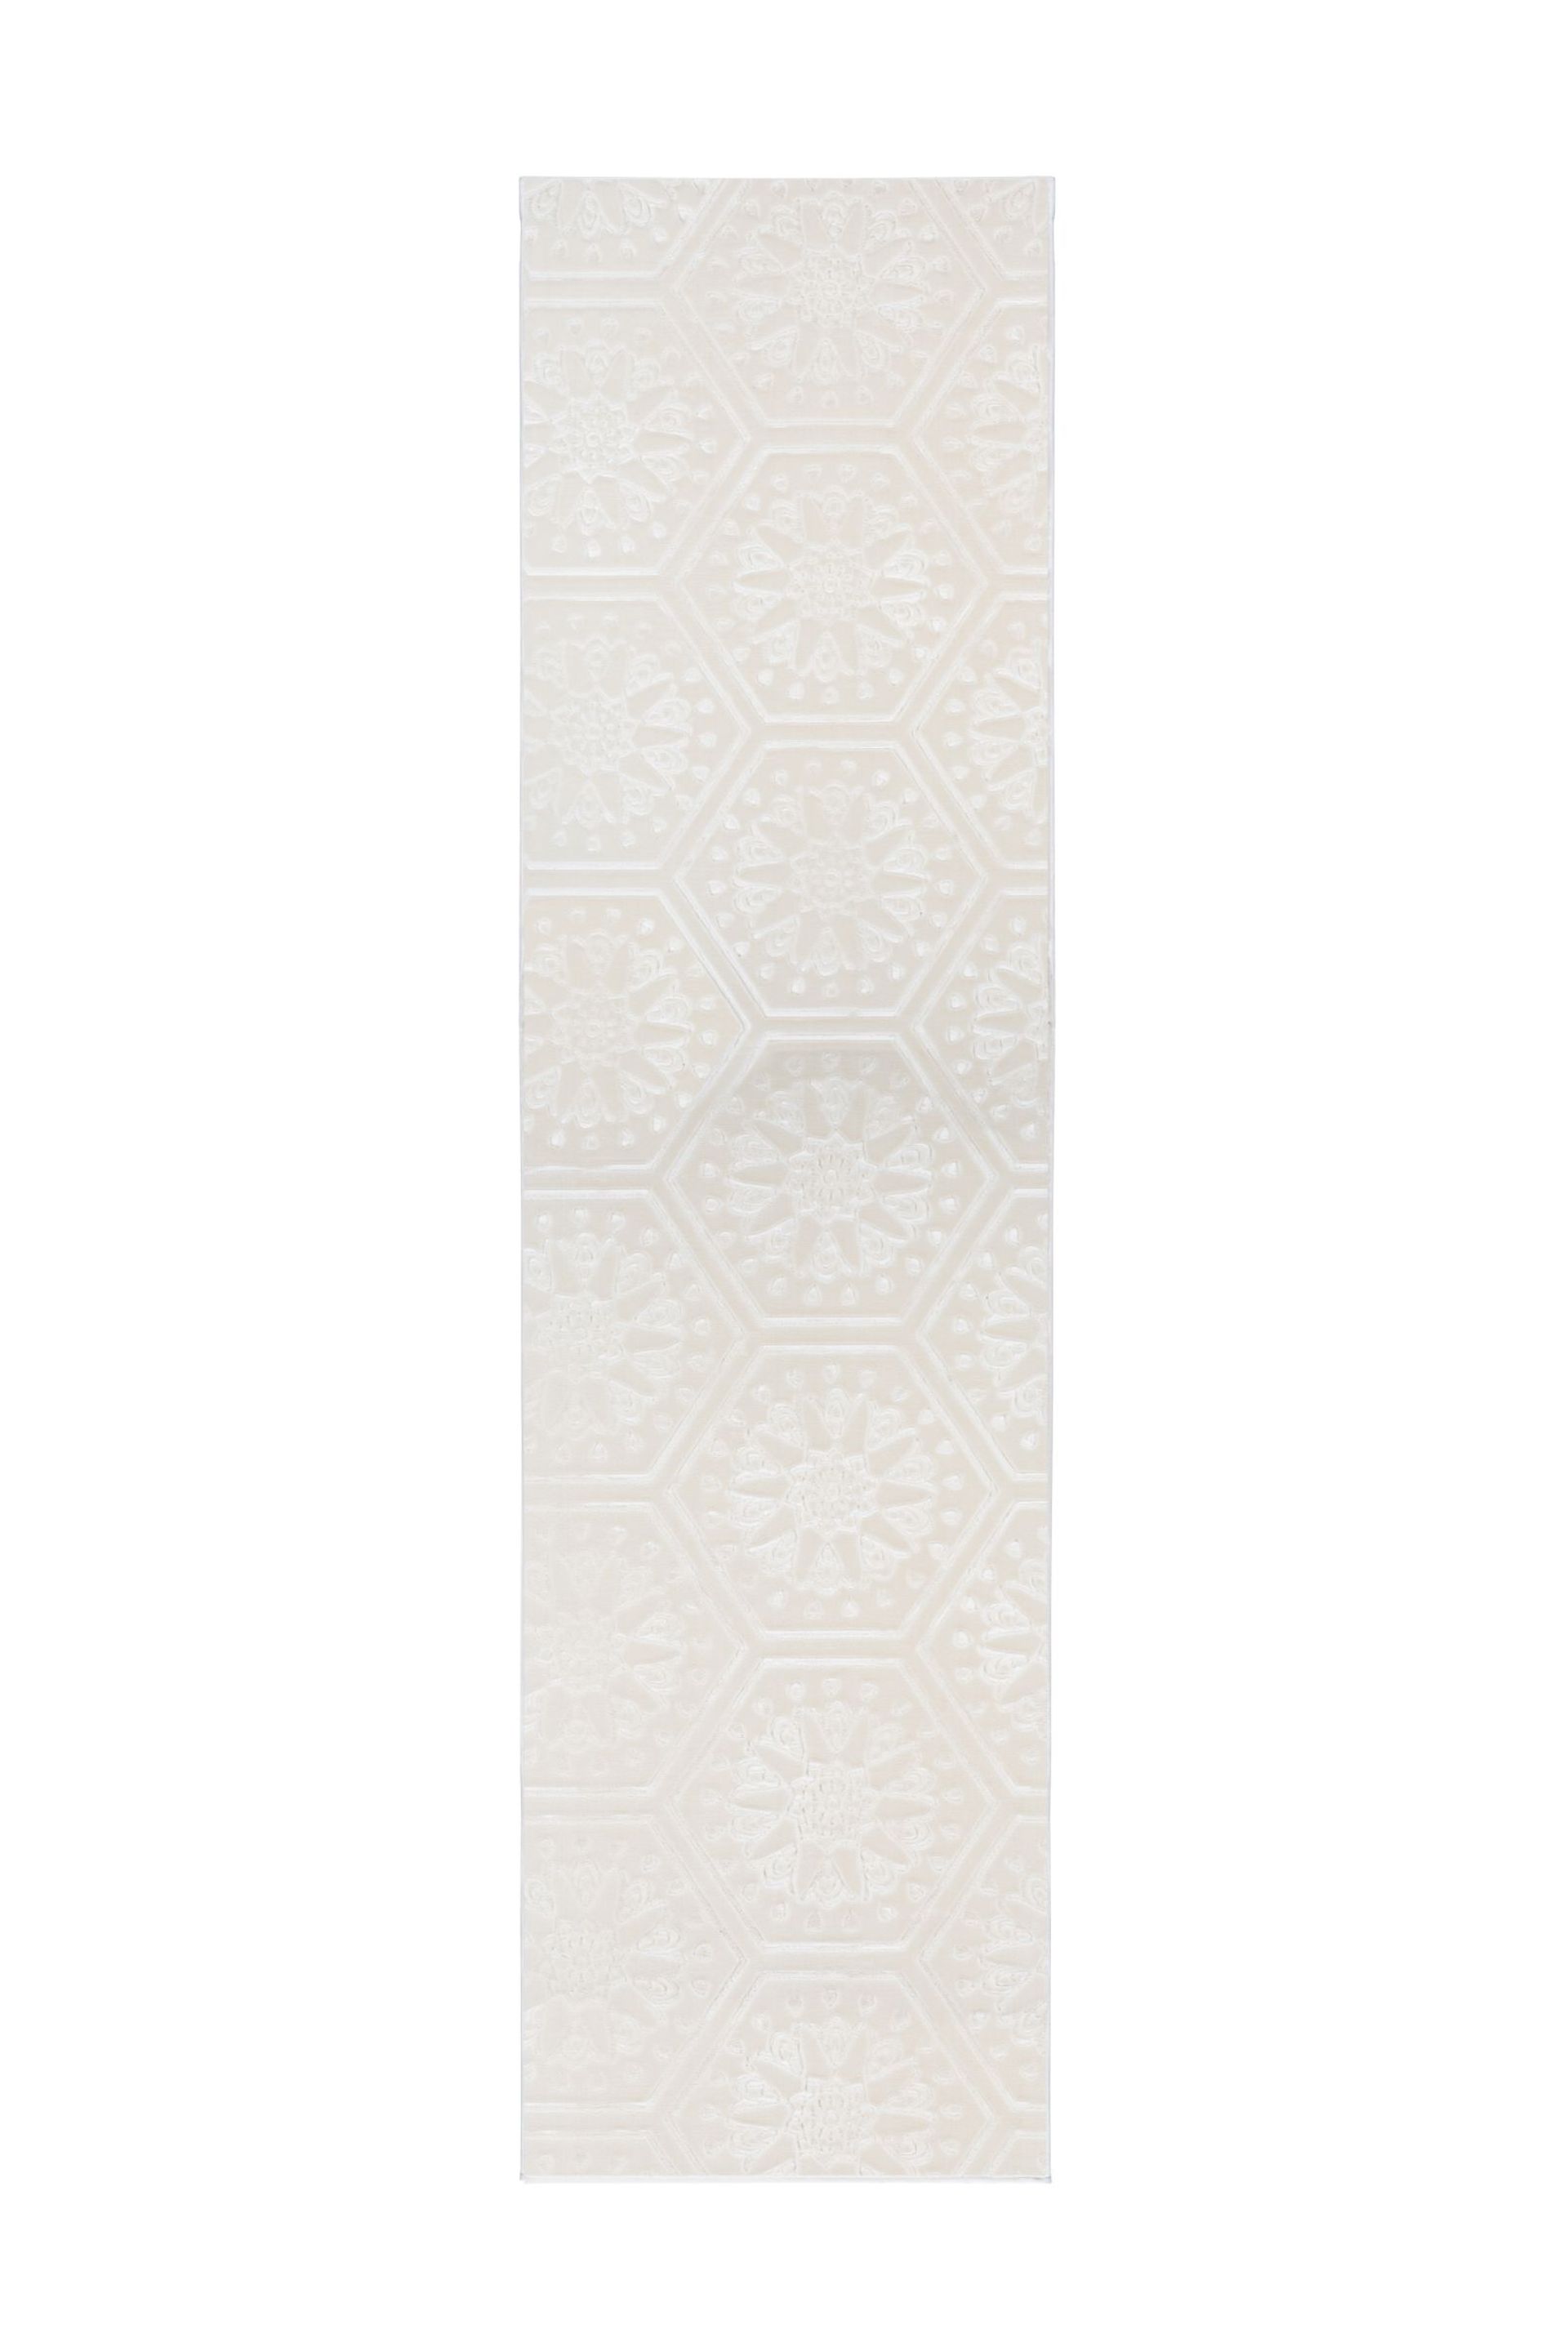 Teppich Monroe 200 Weiß 160 cm x 230 cm